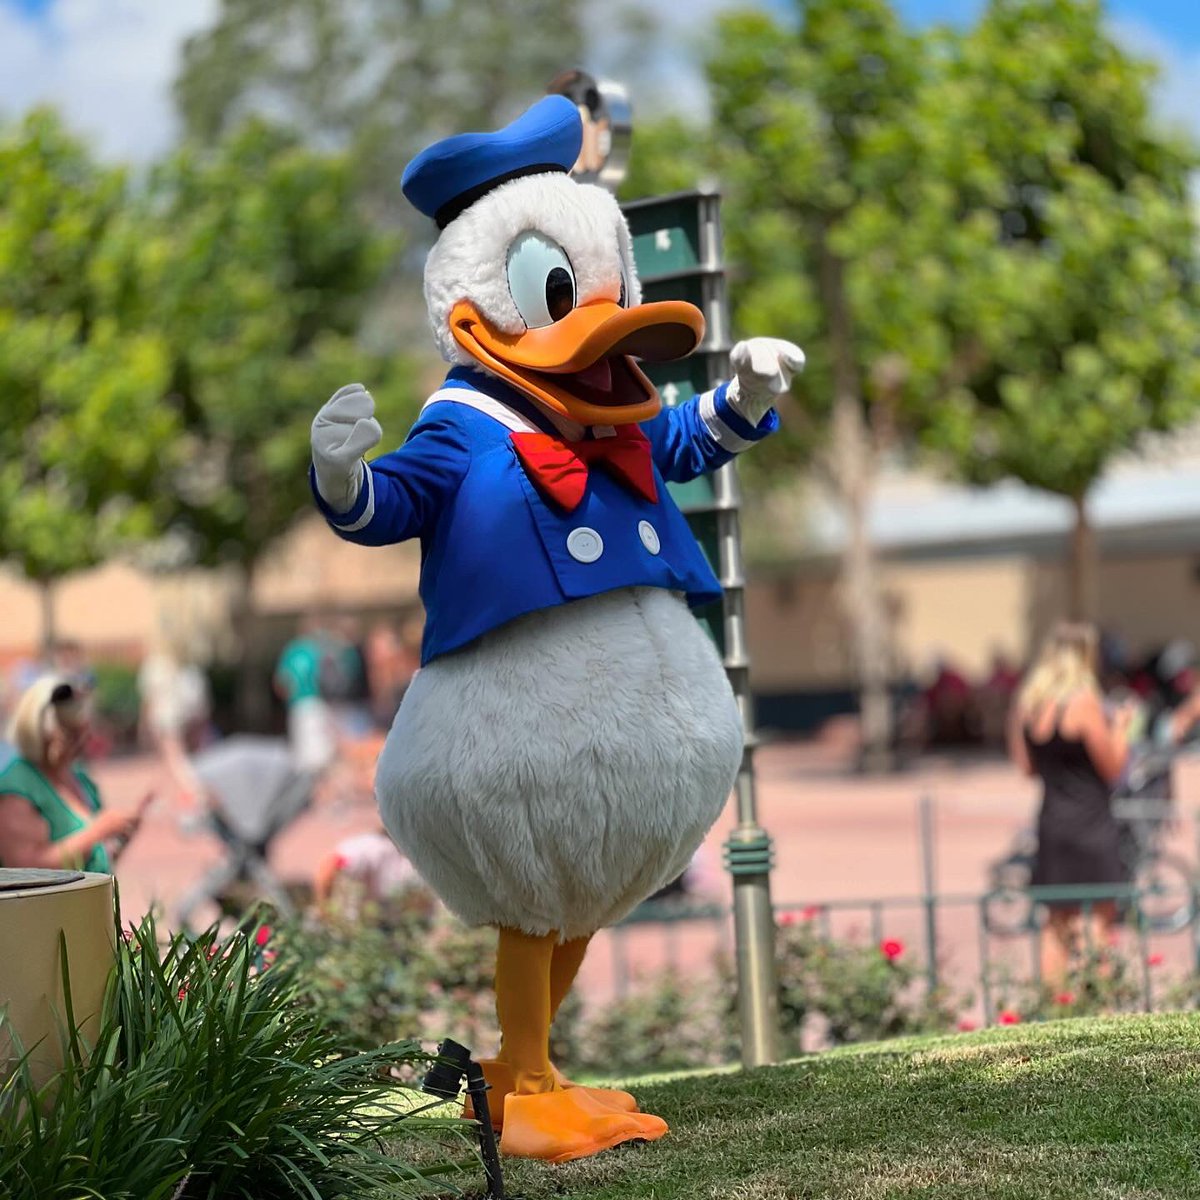 Happy Friday! Donald is definitely happy it’s the weekend! #donaldduck #FridayFeeling #DisneyWorld #disneyshollywoodstudios